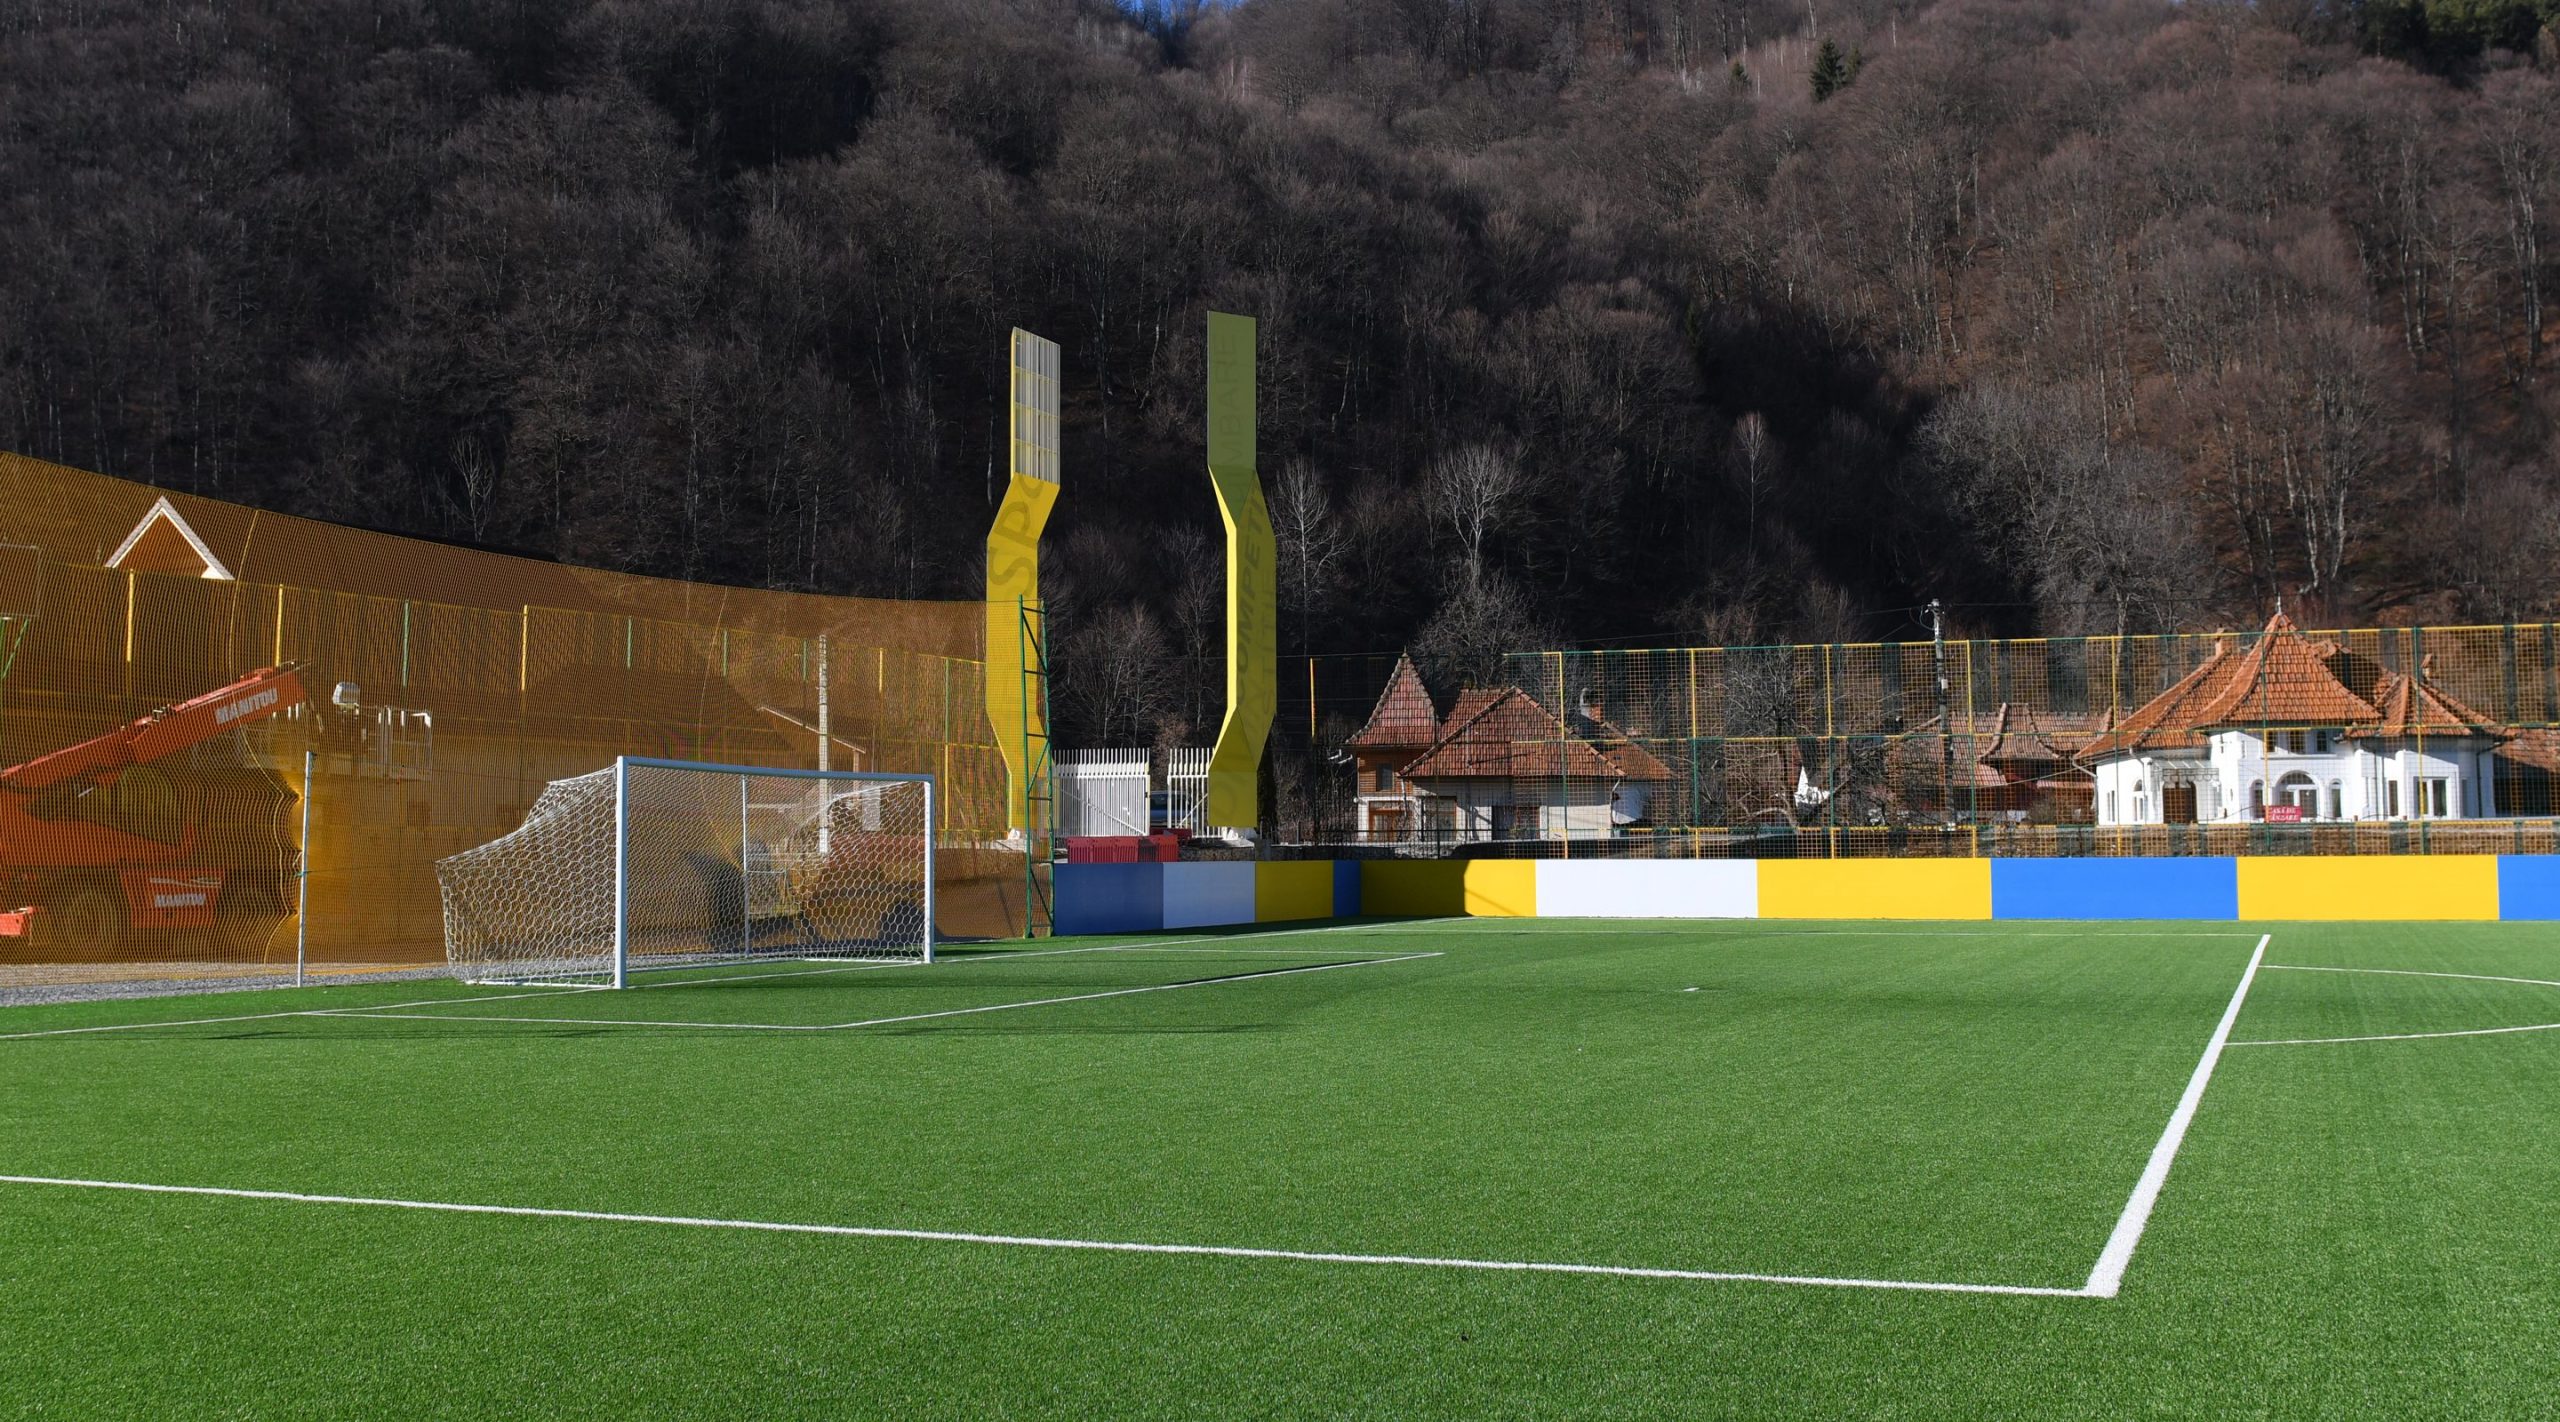 Proiect de arhitectura stadion din Dragoslavele Arges